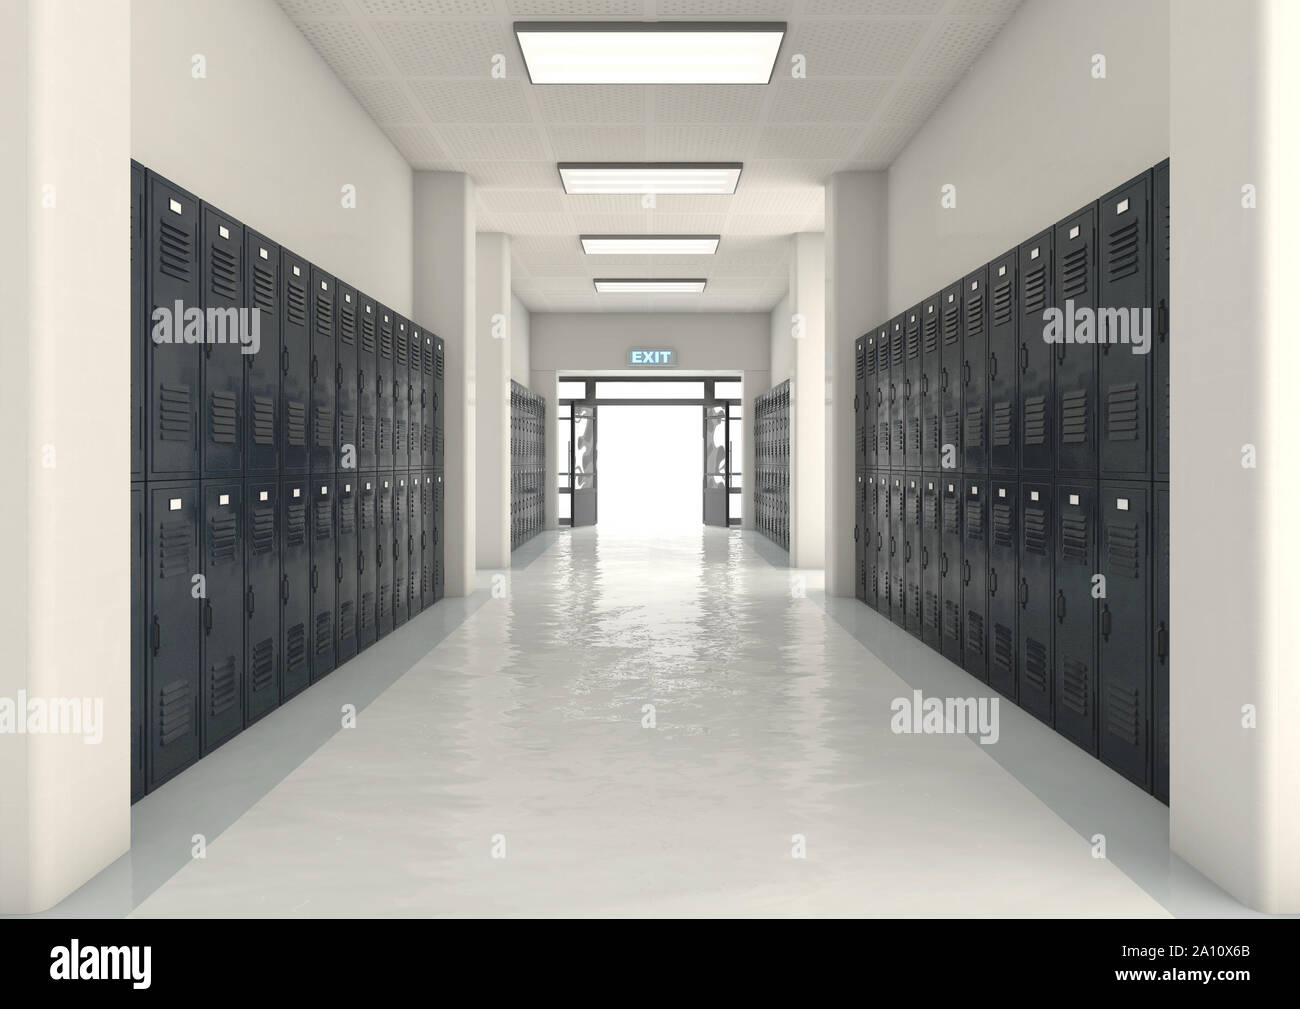 A look down a well lit hallway of school lockers towards an open entrance or exit door - 3D render Stock Photo